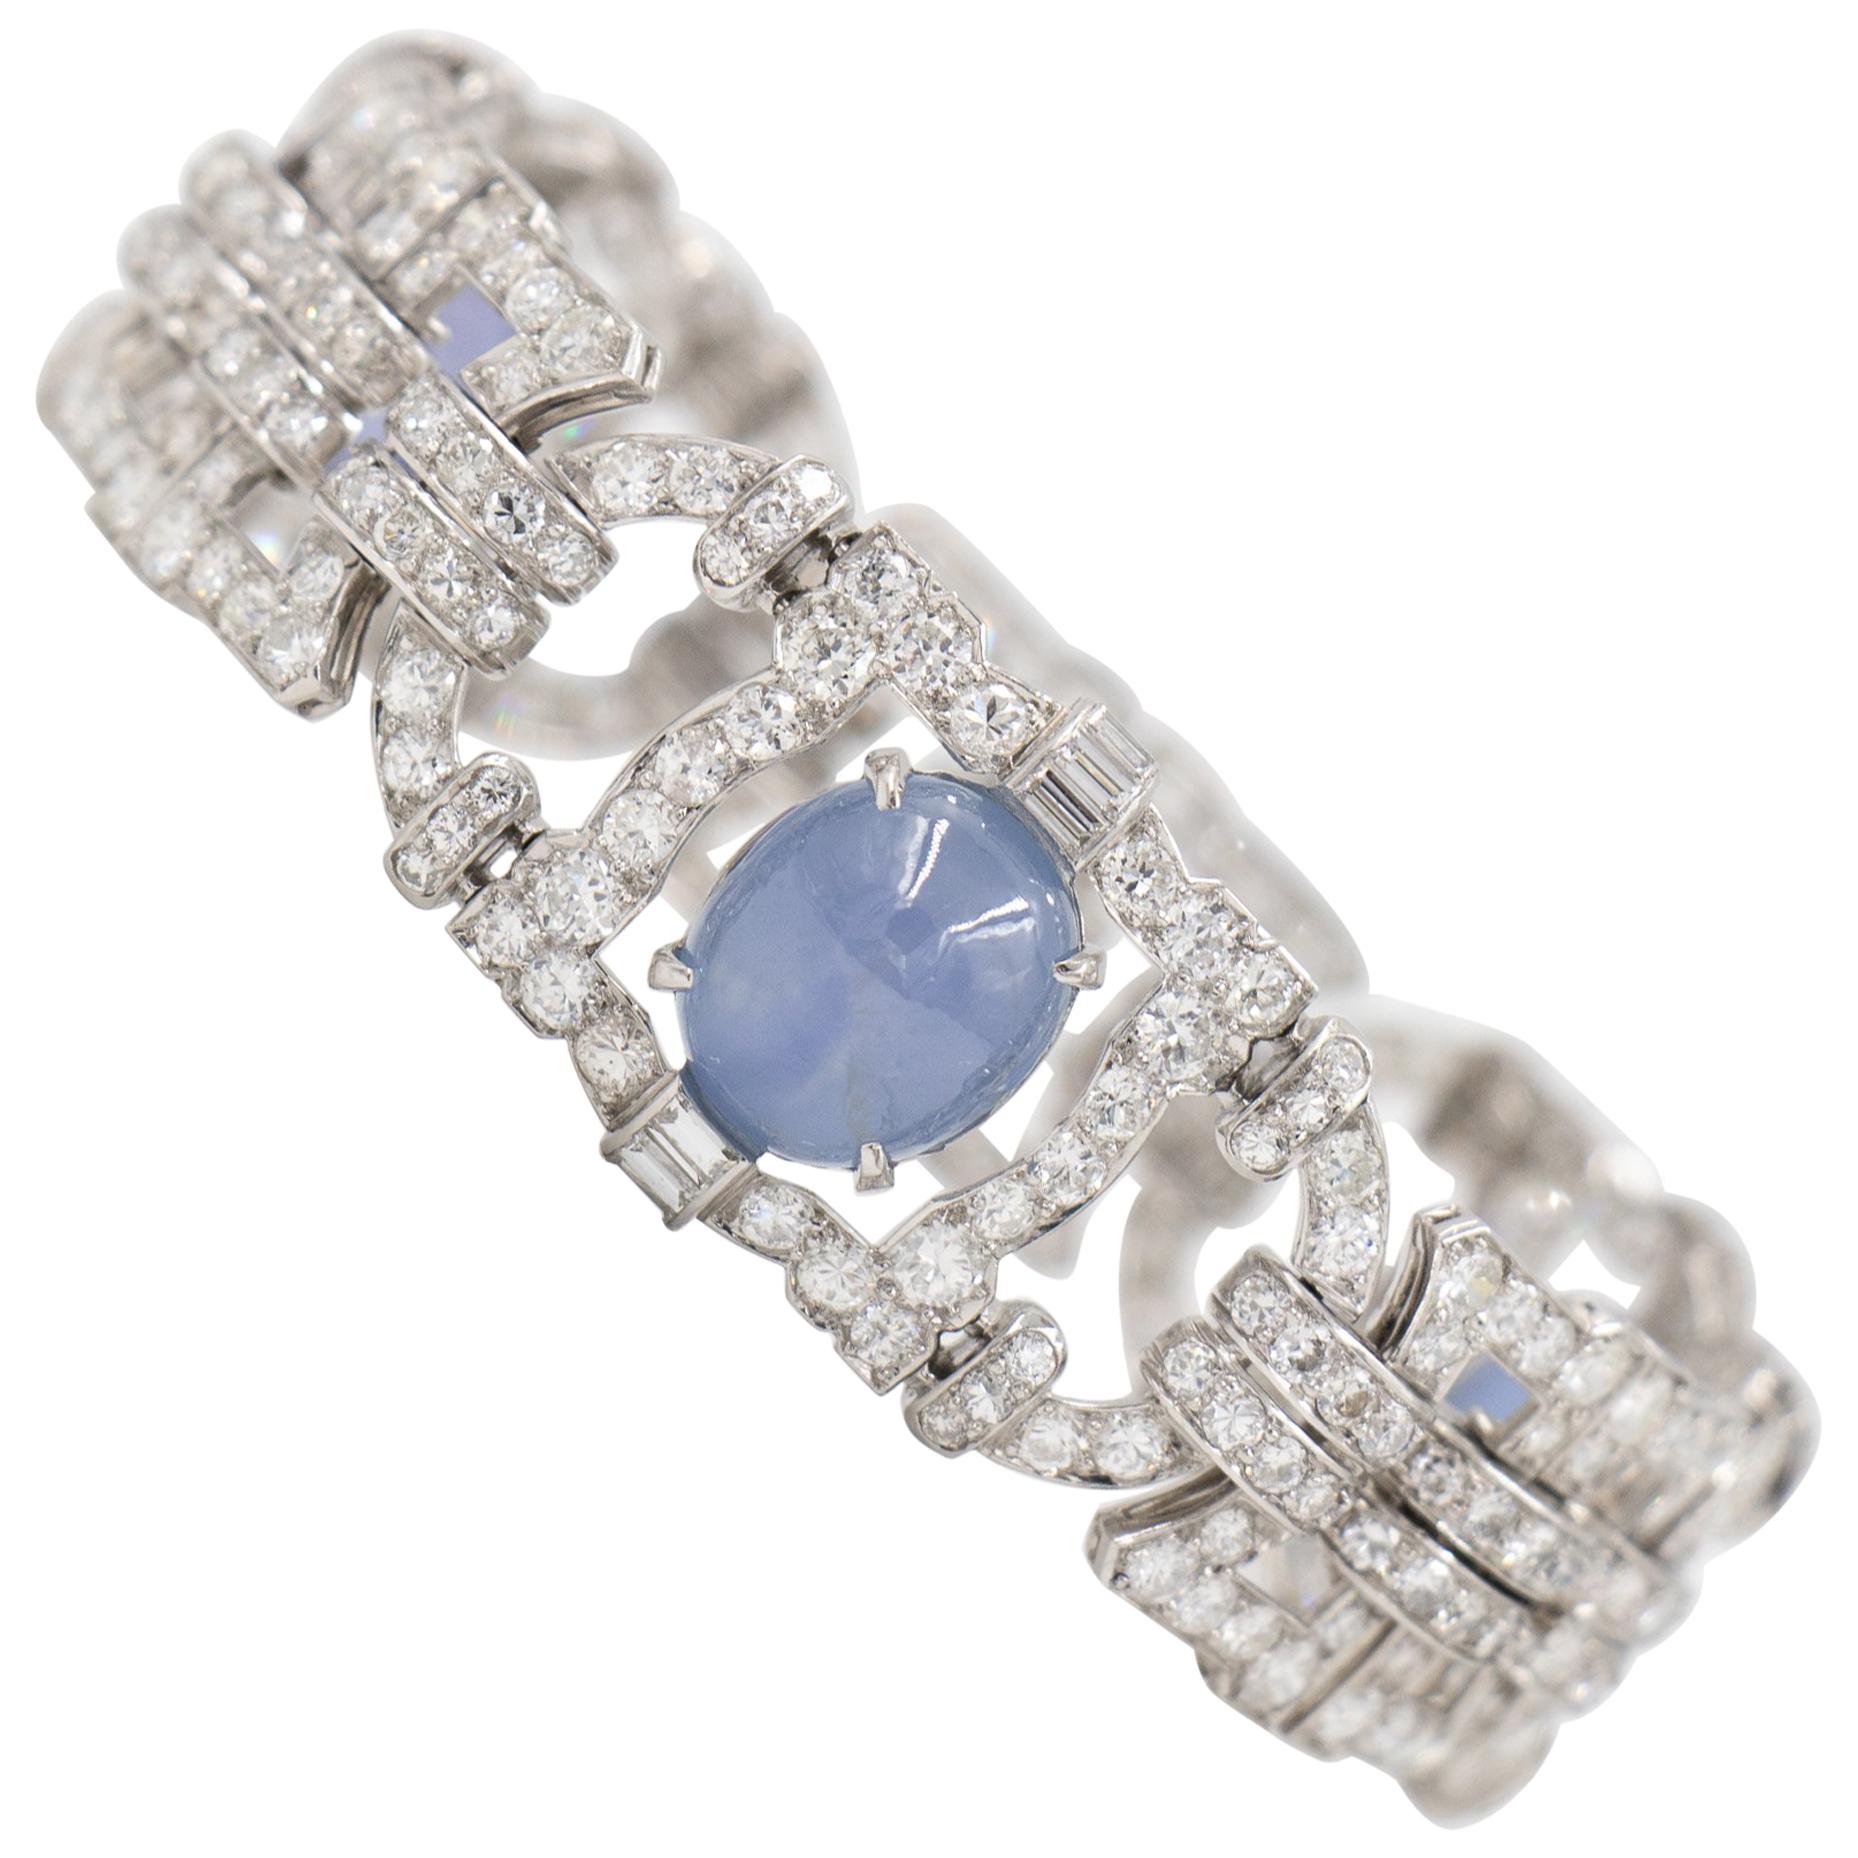 7.5 Carat Diamond and Star Sapphire Art Deco Estate Bracelet in Platinum